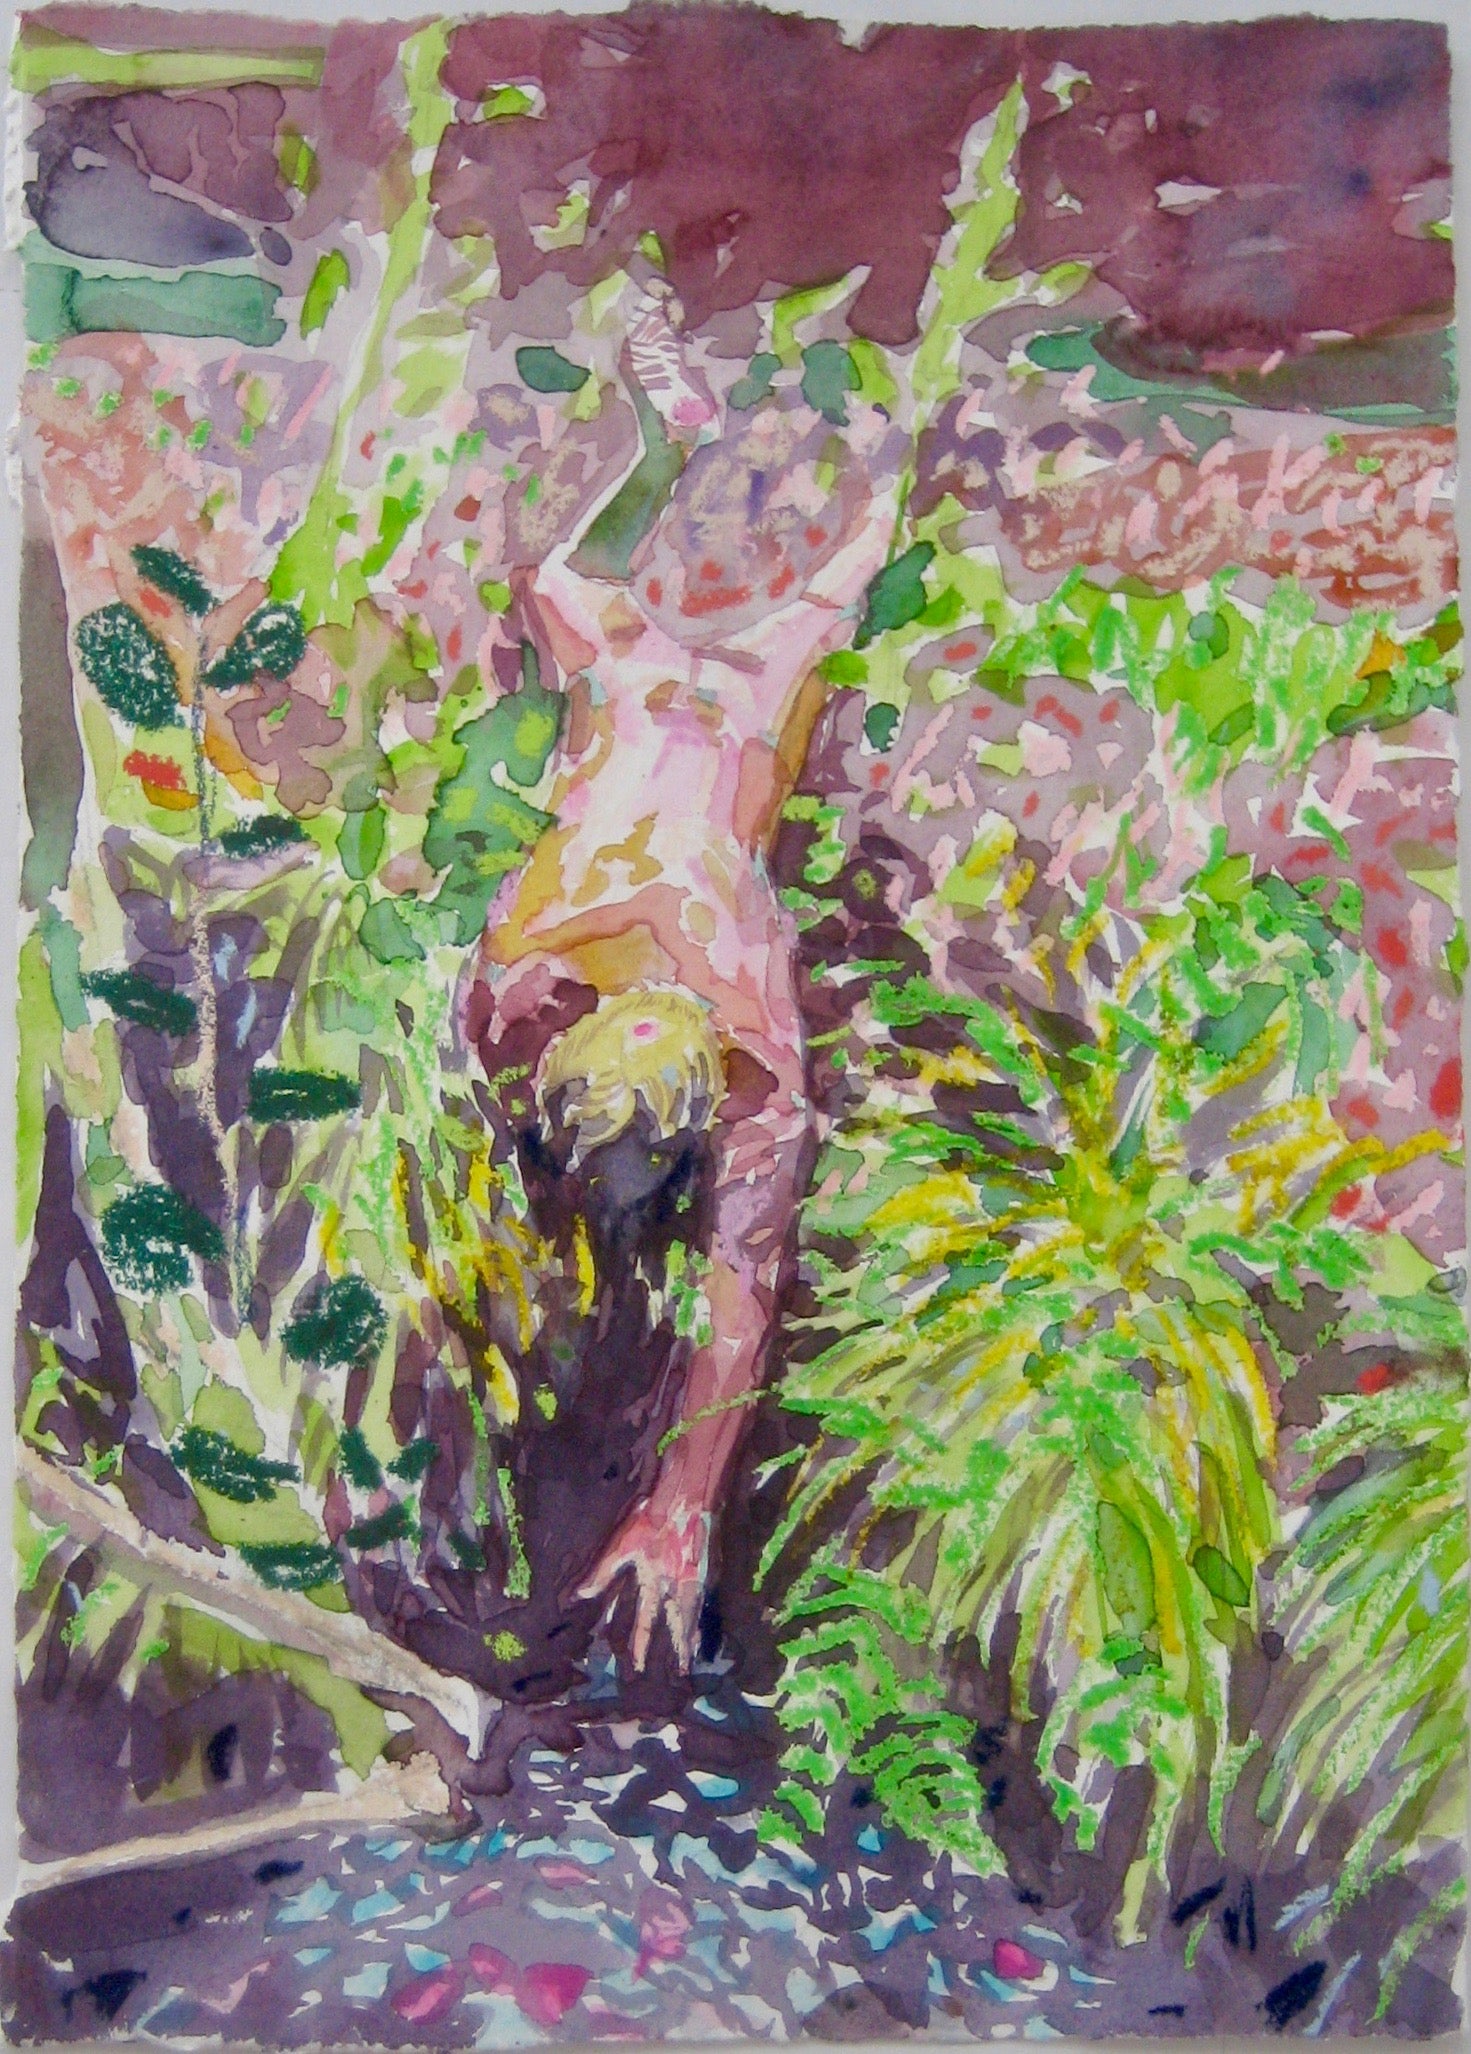 Dominic Shepherd 'Deep Well', 2020 Watercolour, pastel on paper 30x21cm